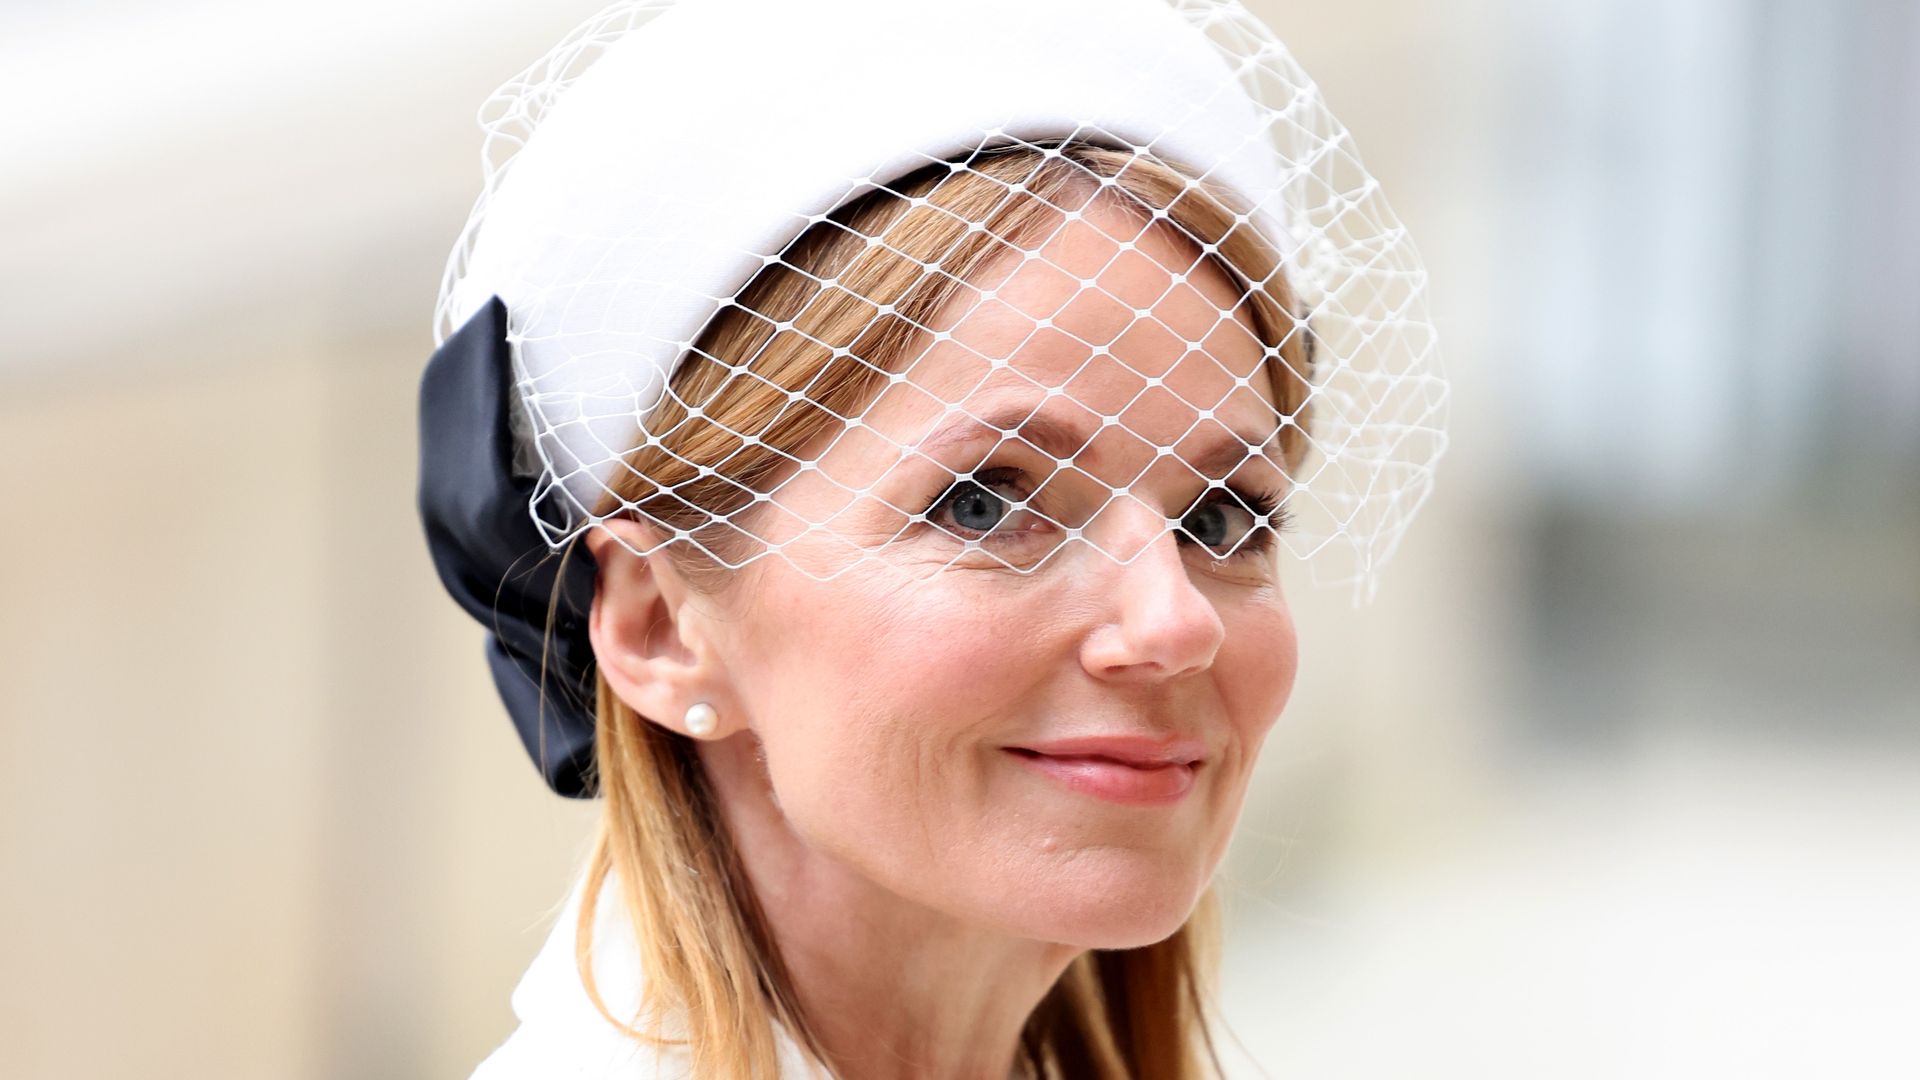 Geri Halliwell-Horner smiling in a white veiled hat